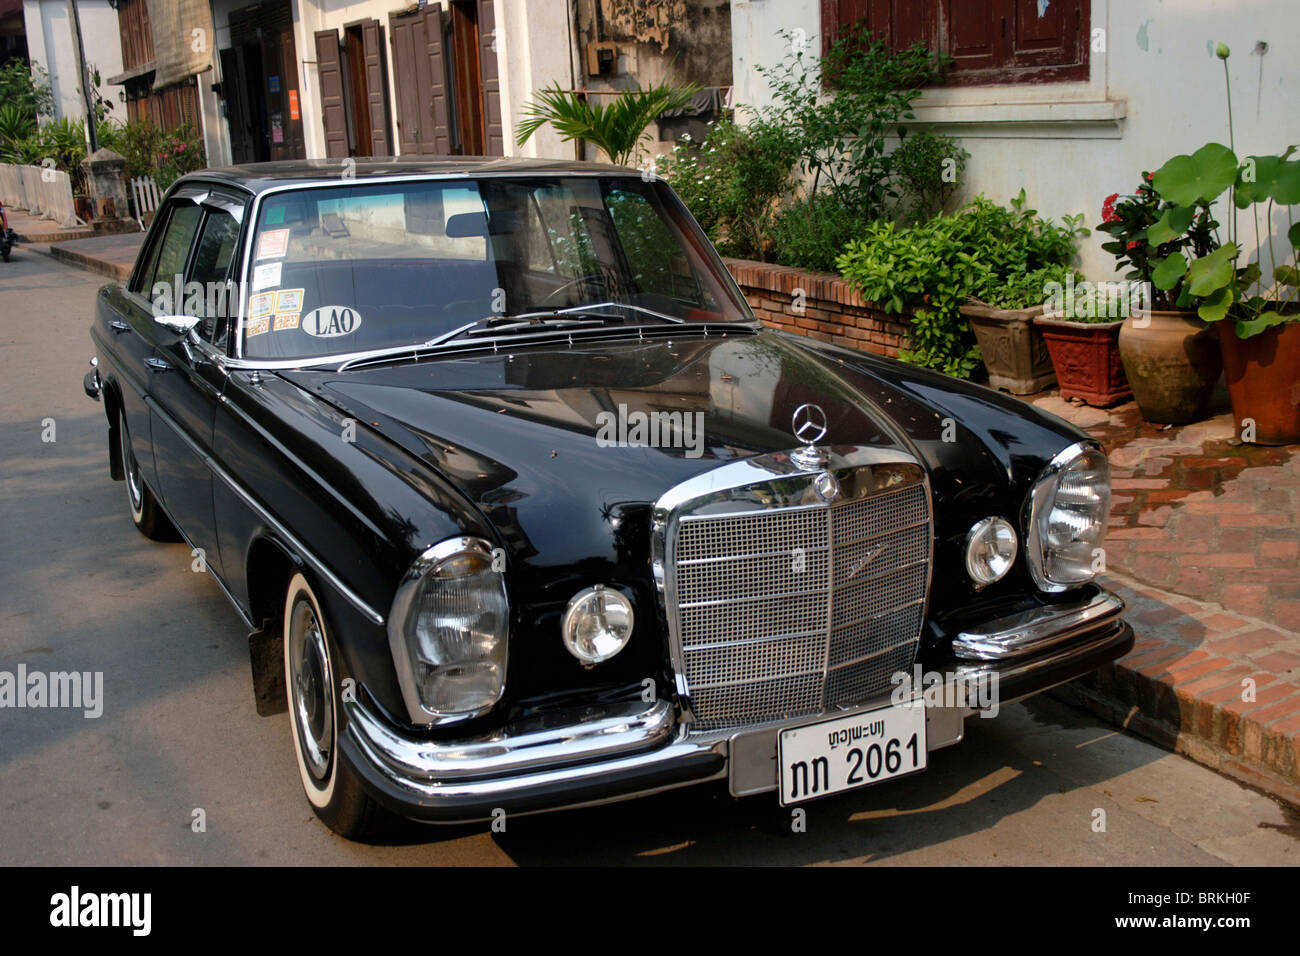 A black fully restored 1960's era Mercedes Benz 280 S ...